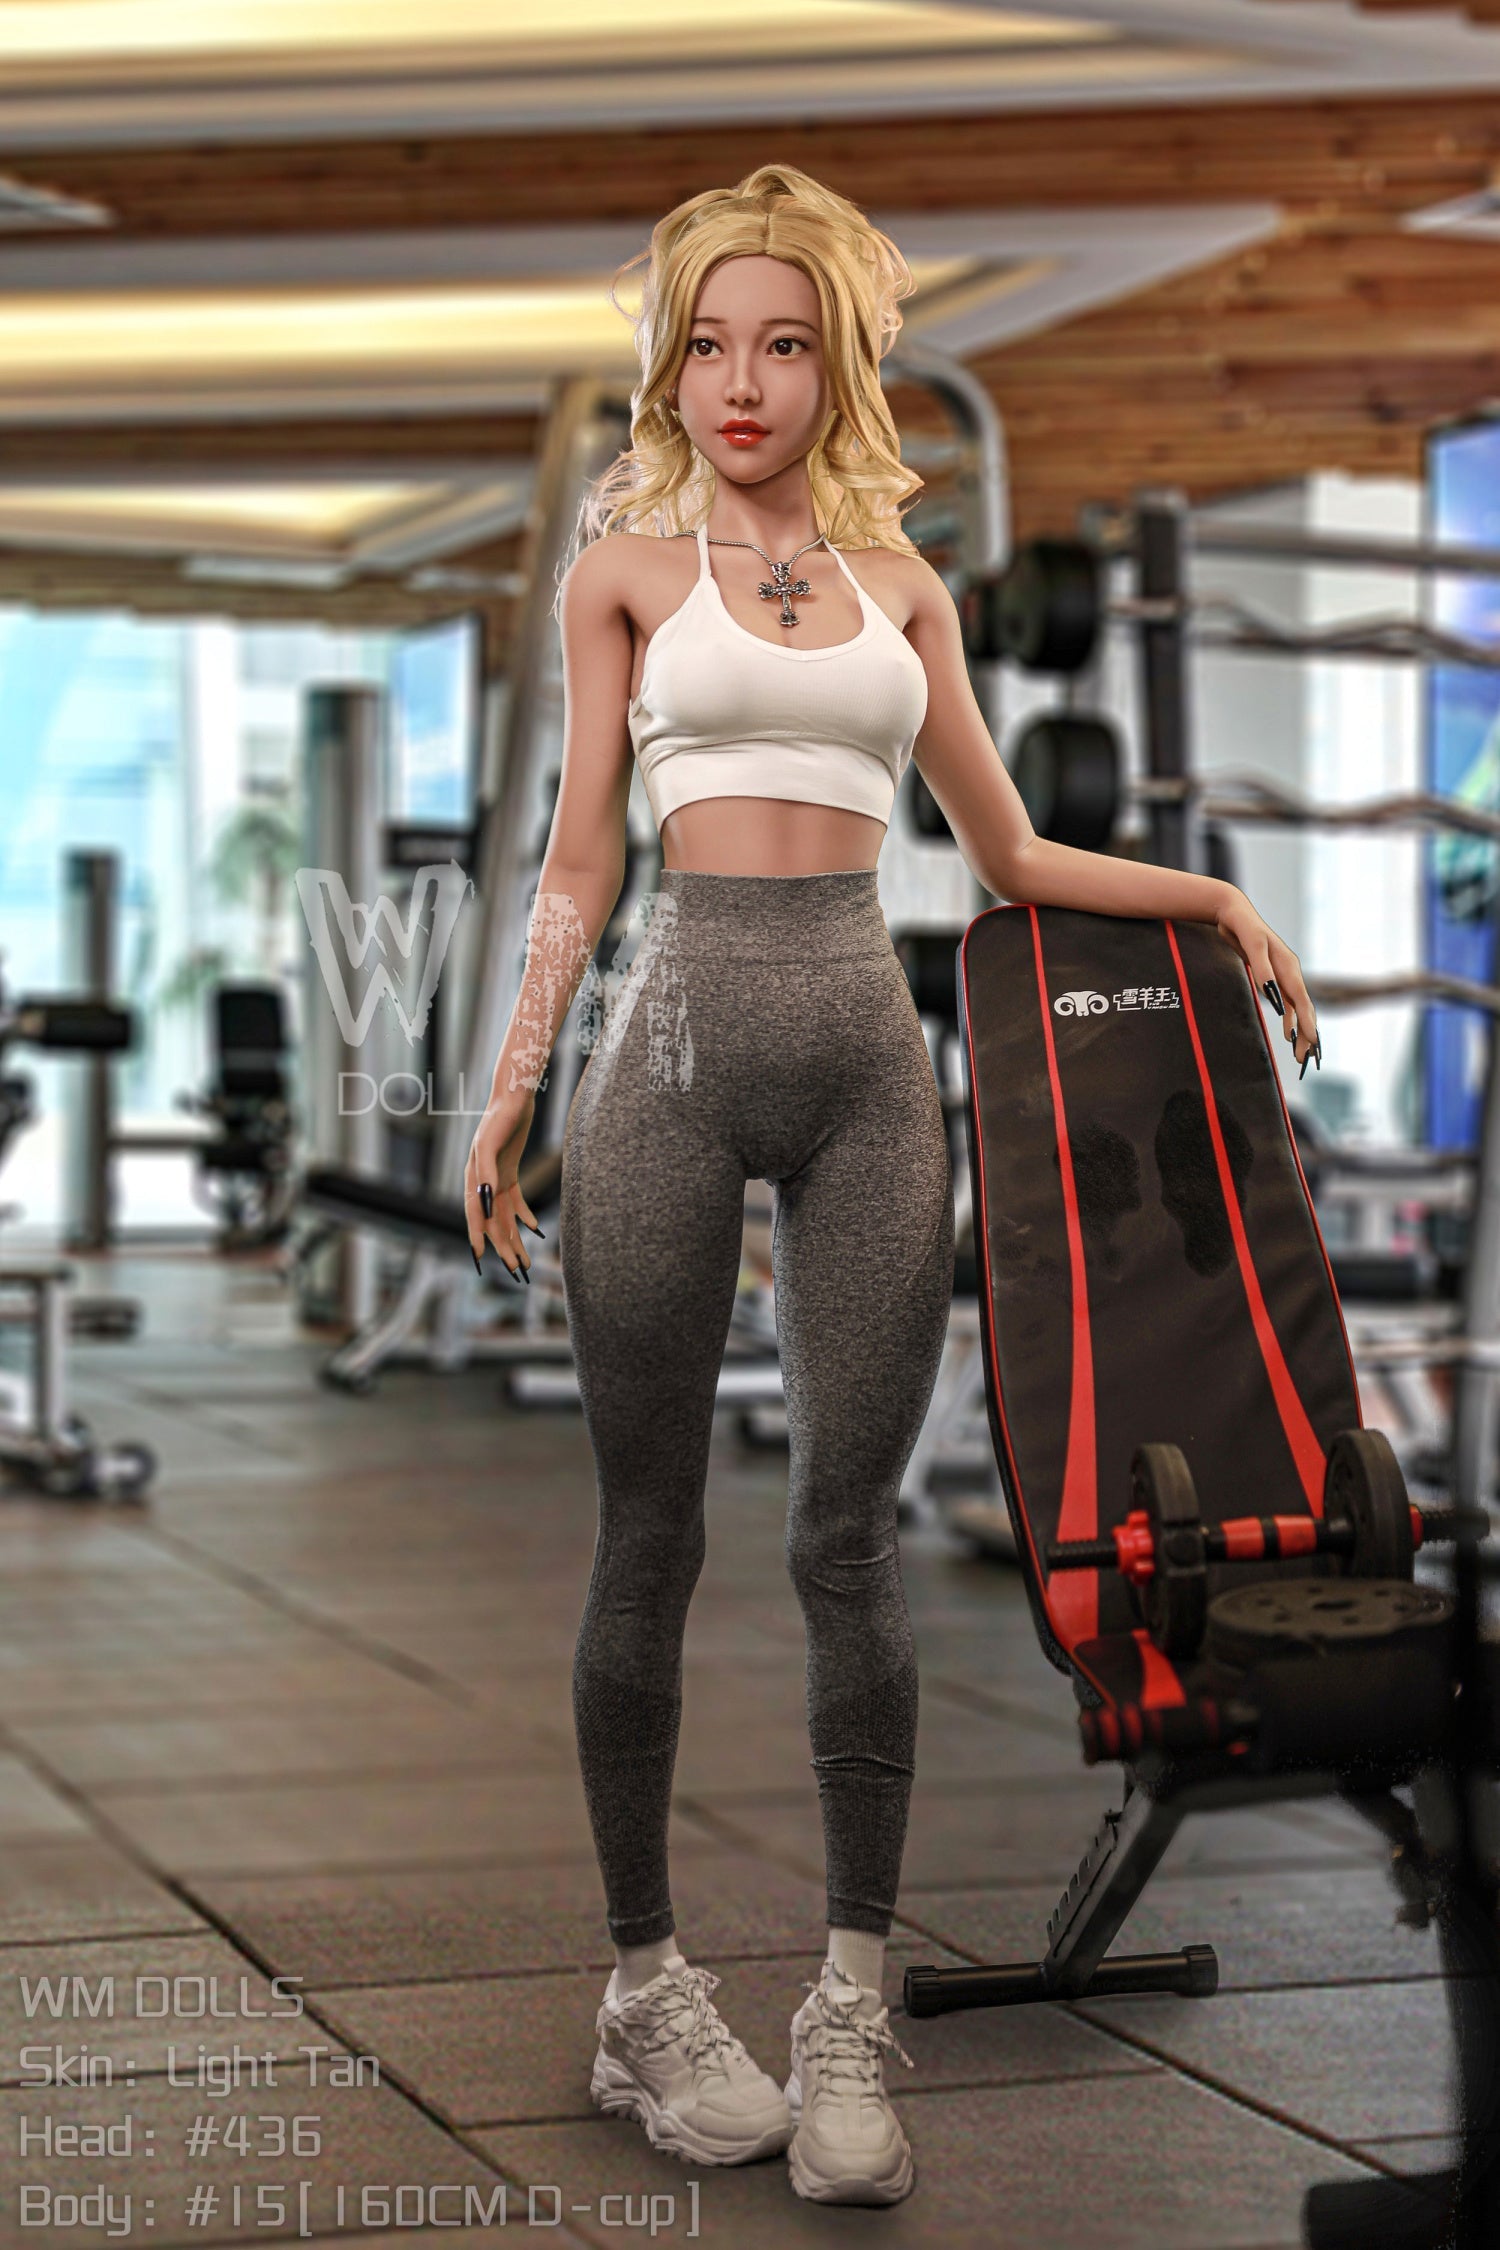 Esra - 160cm D-cup + #436 Slim girl sex doll in the gym by Anmodolls